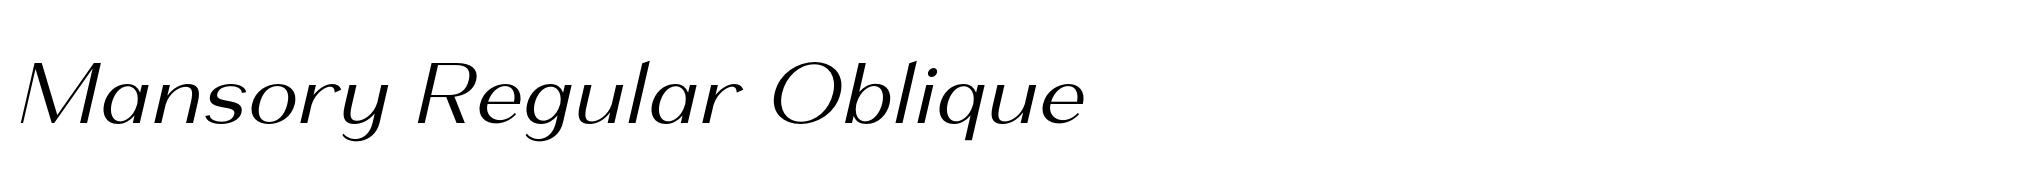 Mansory Regular Oblique image